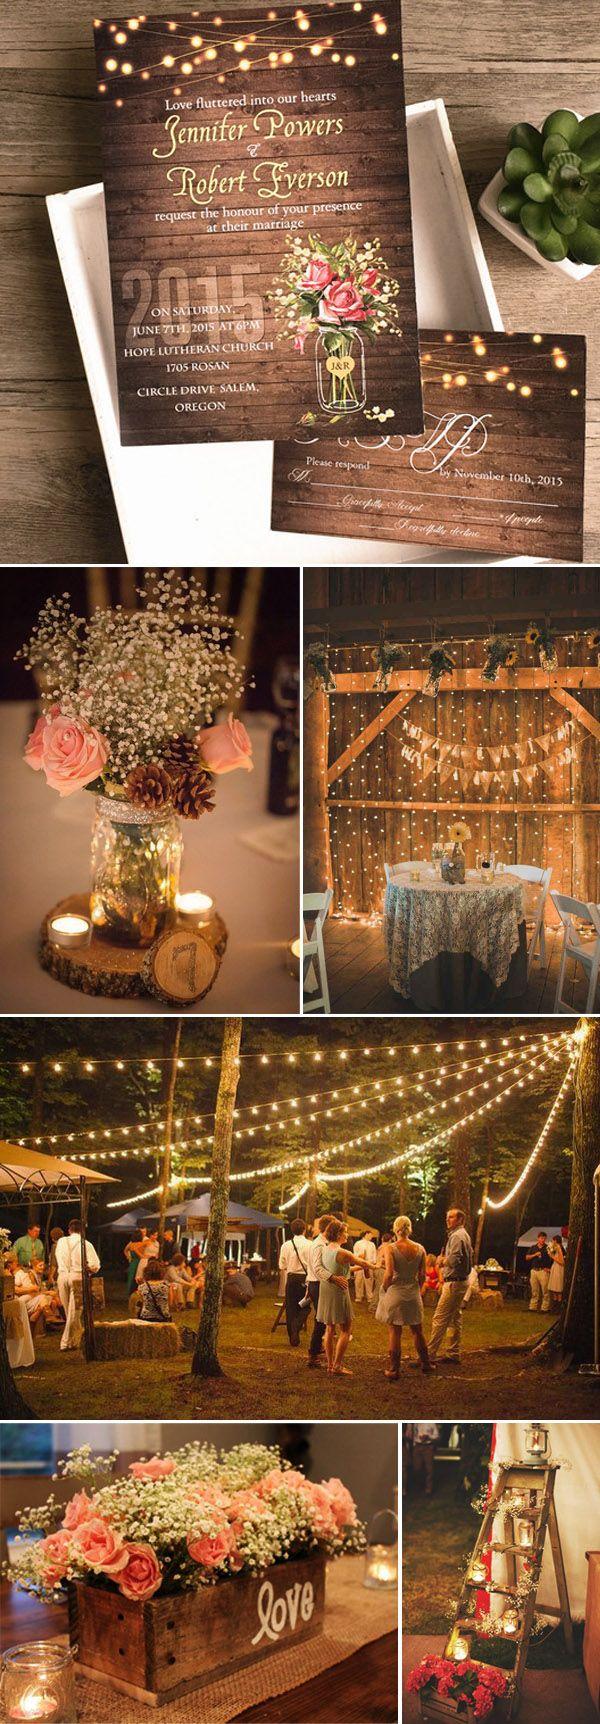 Wedding - Seven Popular Rustic Wedding Invitation Styles For 2016 Spring & Summer Weddings